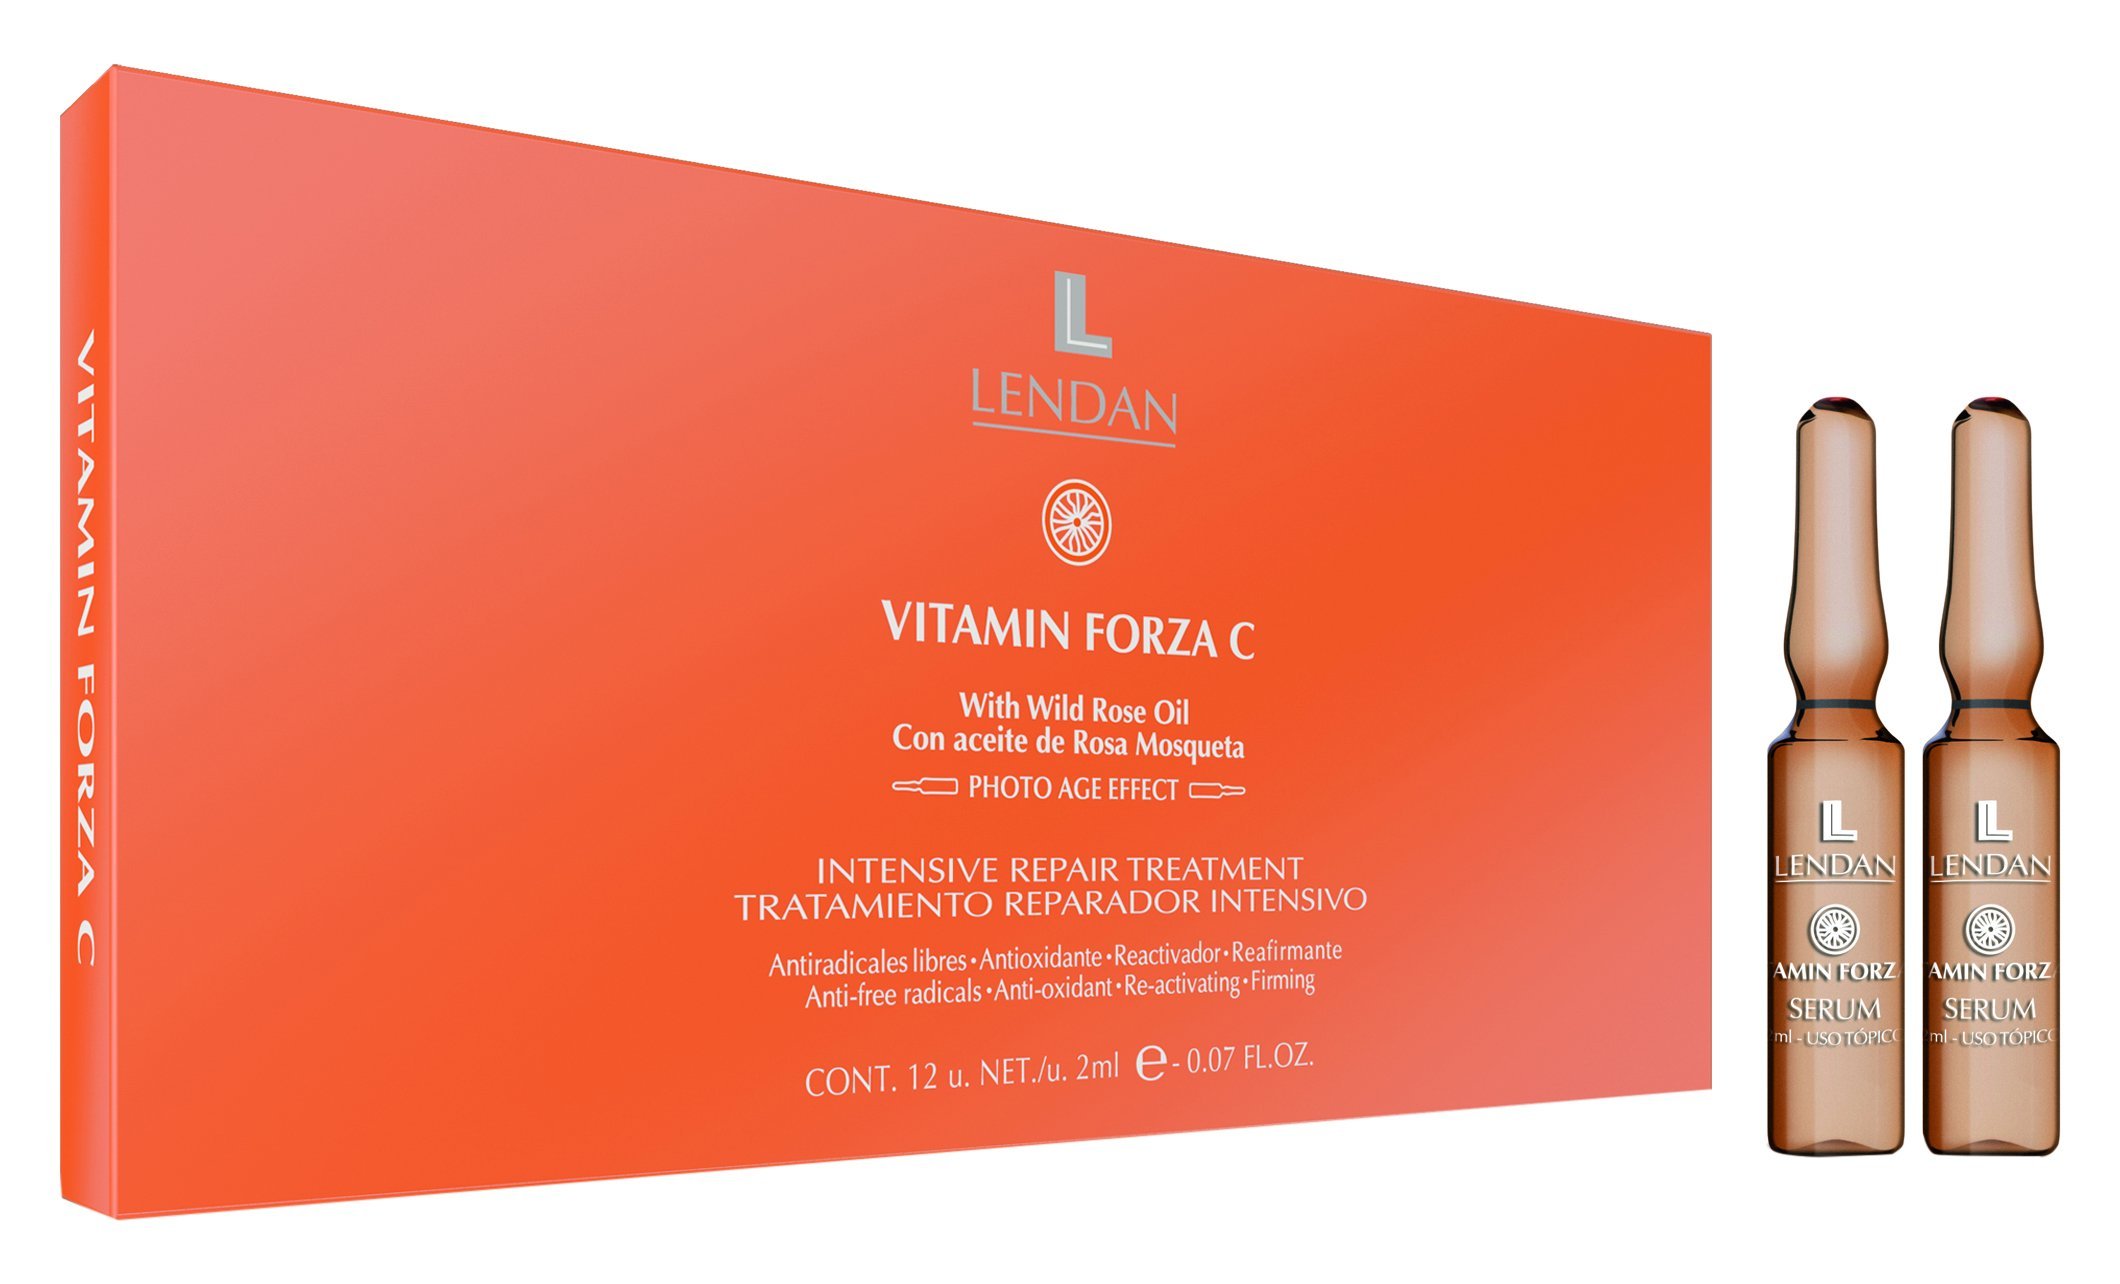 Forza C Vitamin Intensive Repair Treatment Lendan